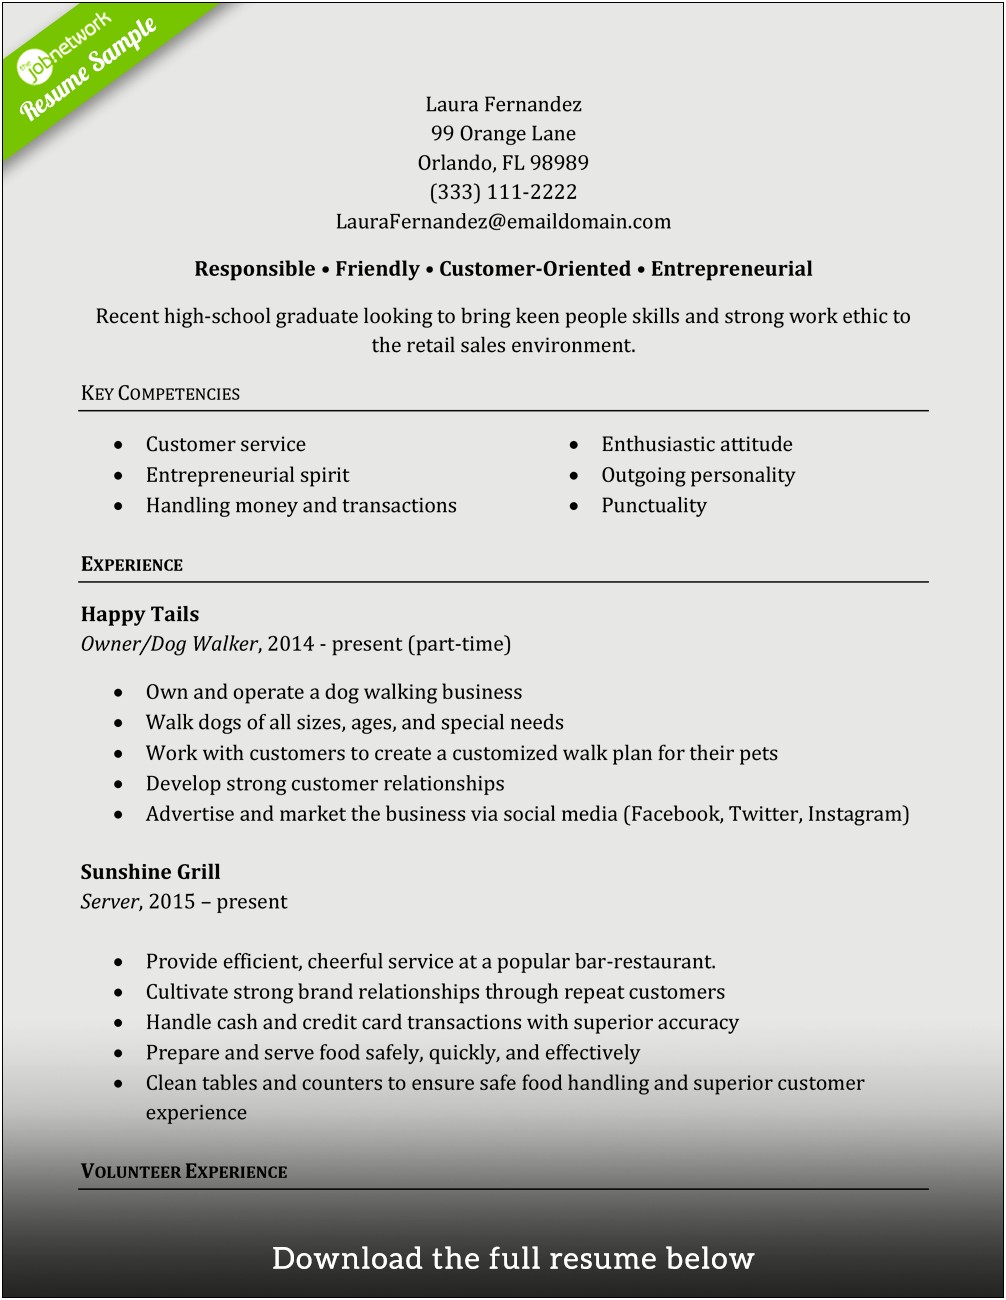 Description Of Responsibilites For Sales Associate For Resume